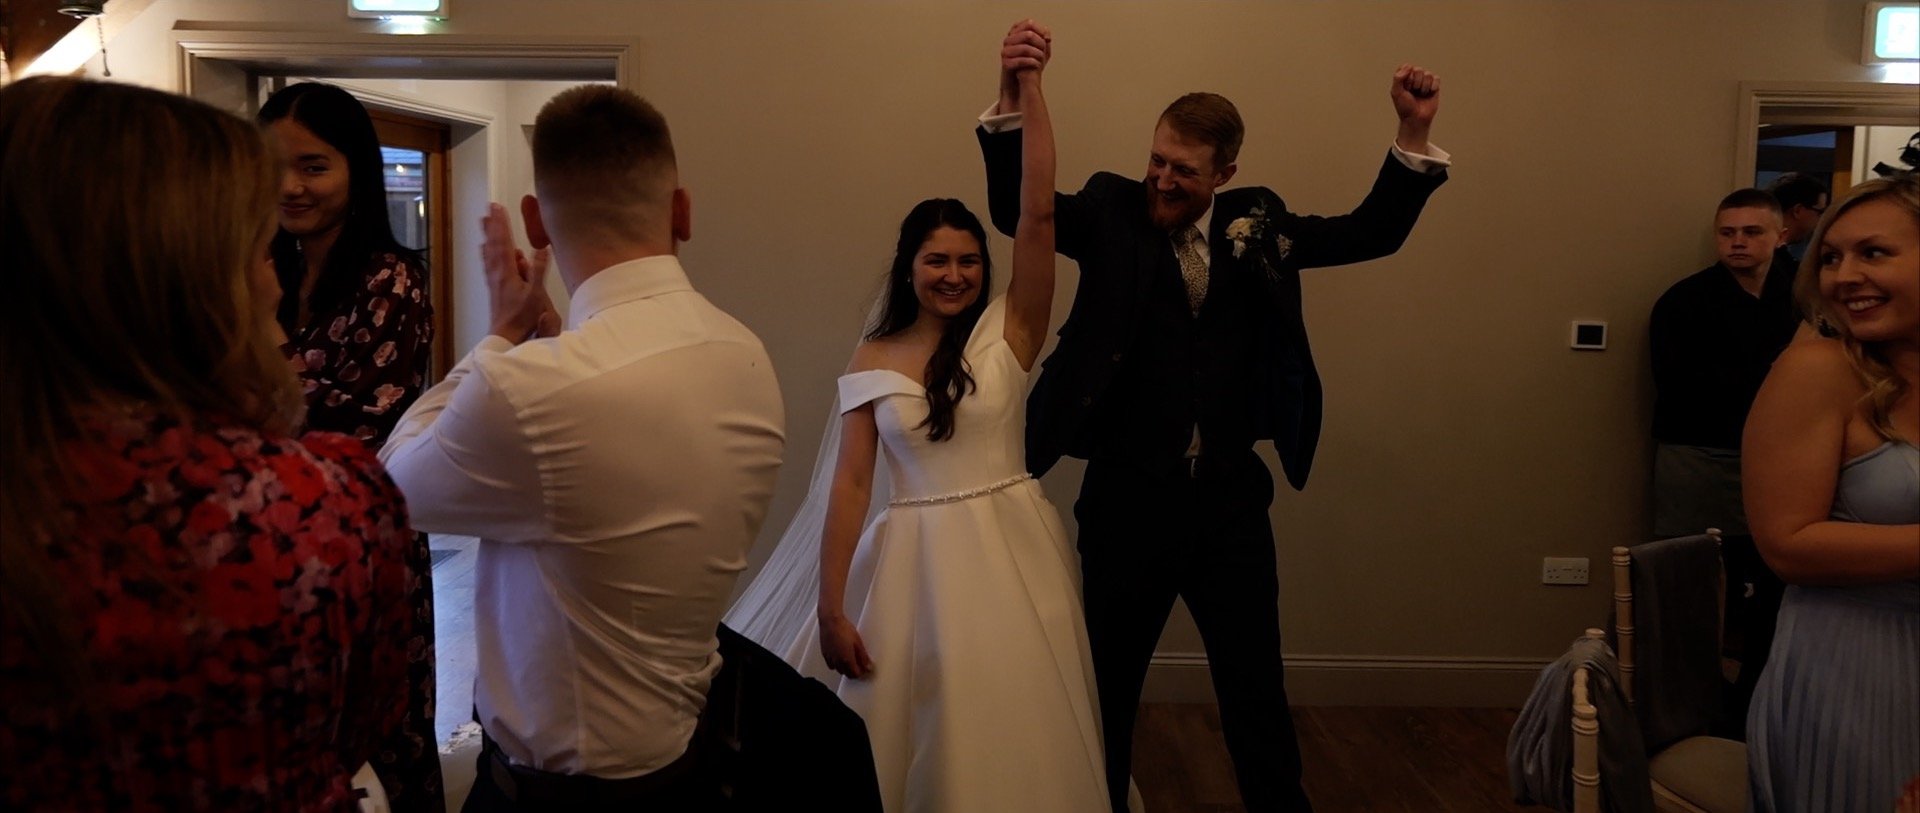 Apton Hall Wedding Videography - 3 Cheers Media - Enter wedding breakfast.jpg